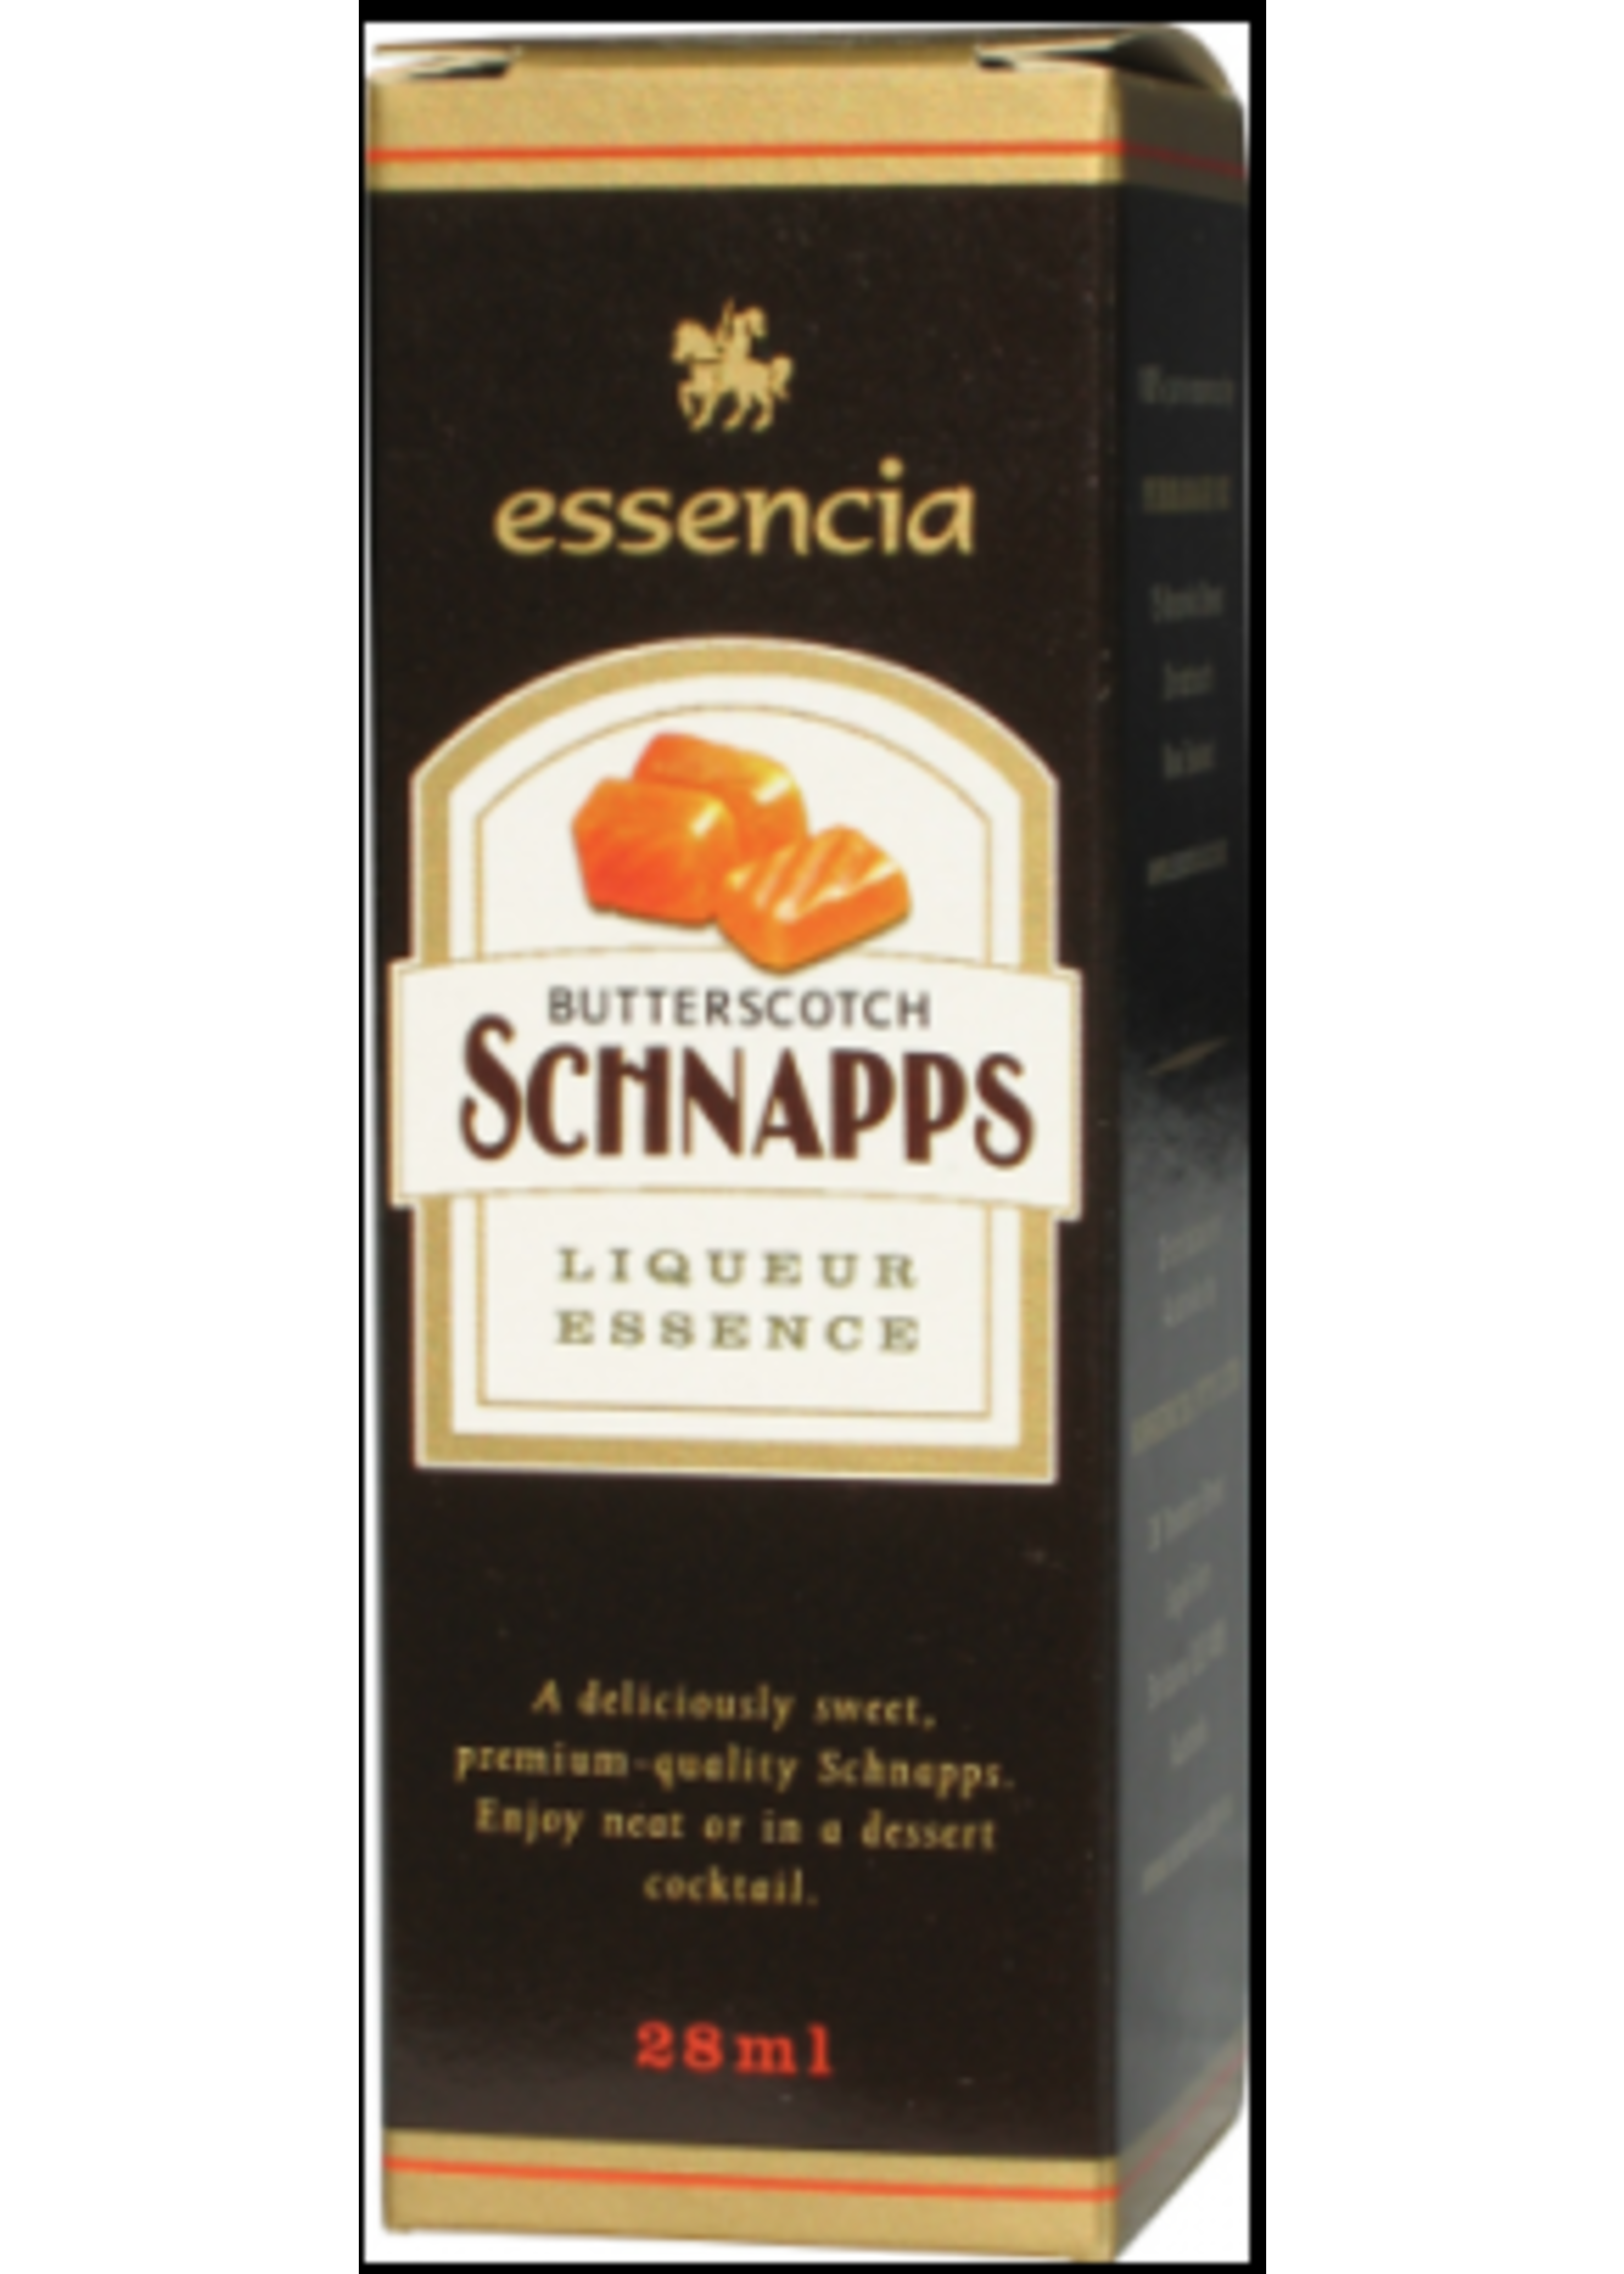 essencia Essencia Butterscotch Schnapps Liqueur Essence 28ml